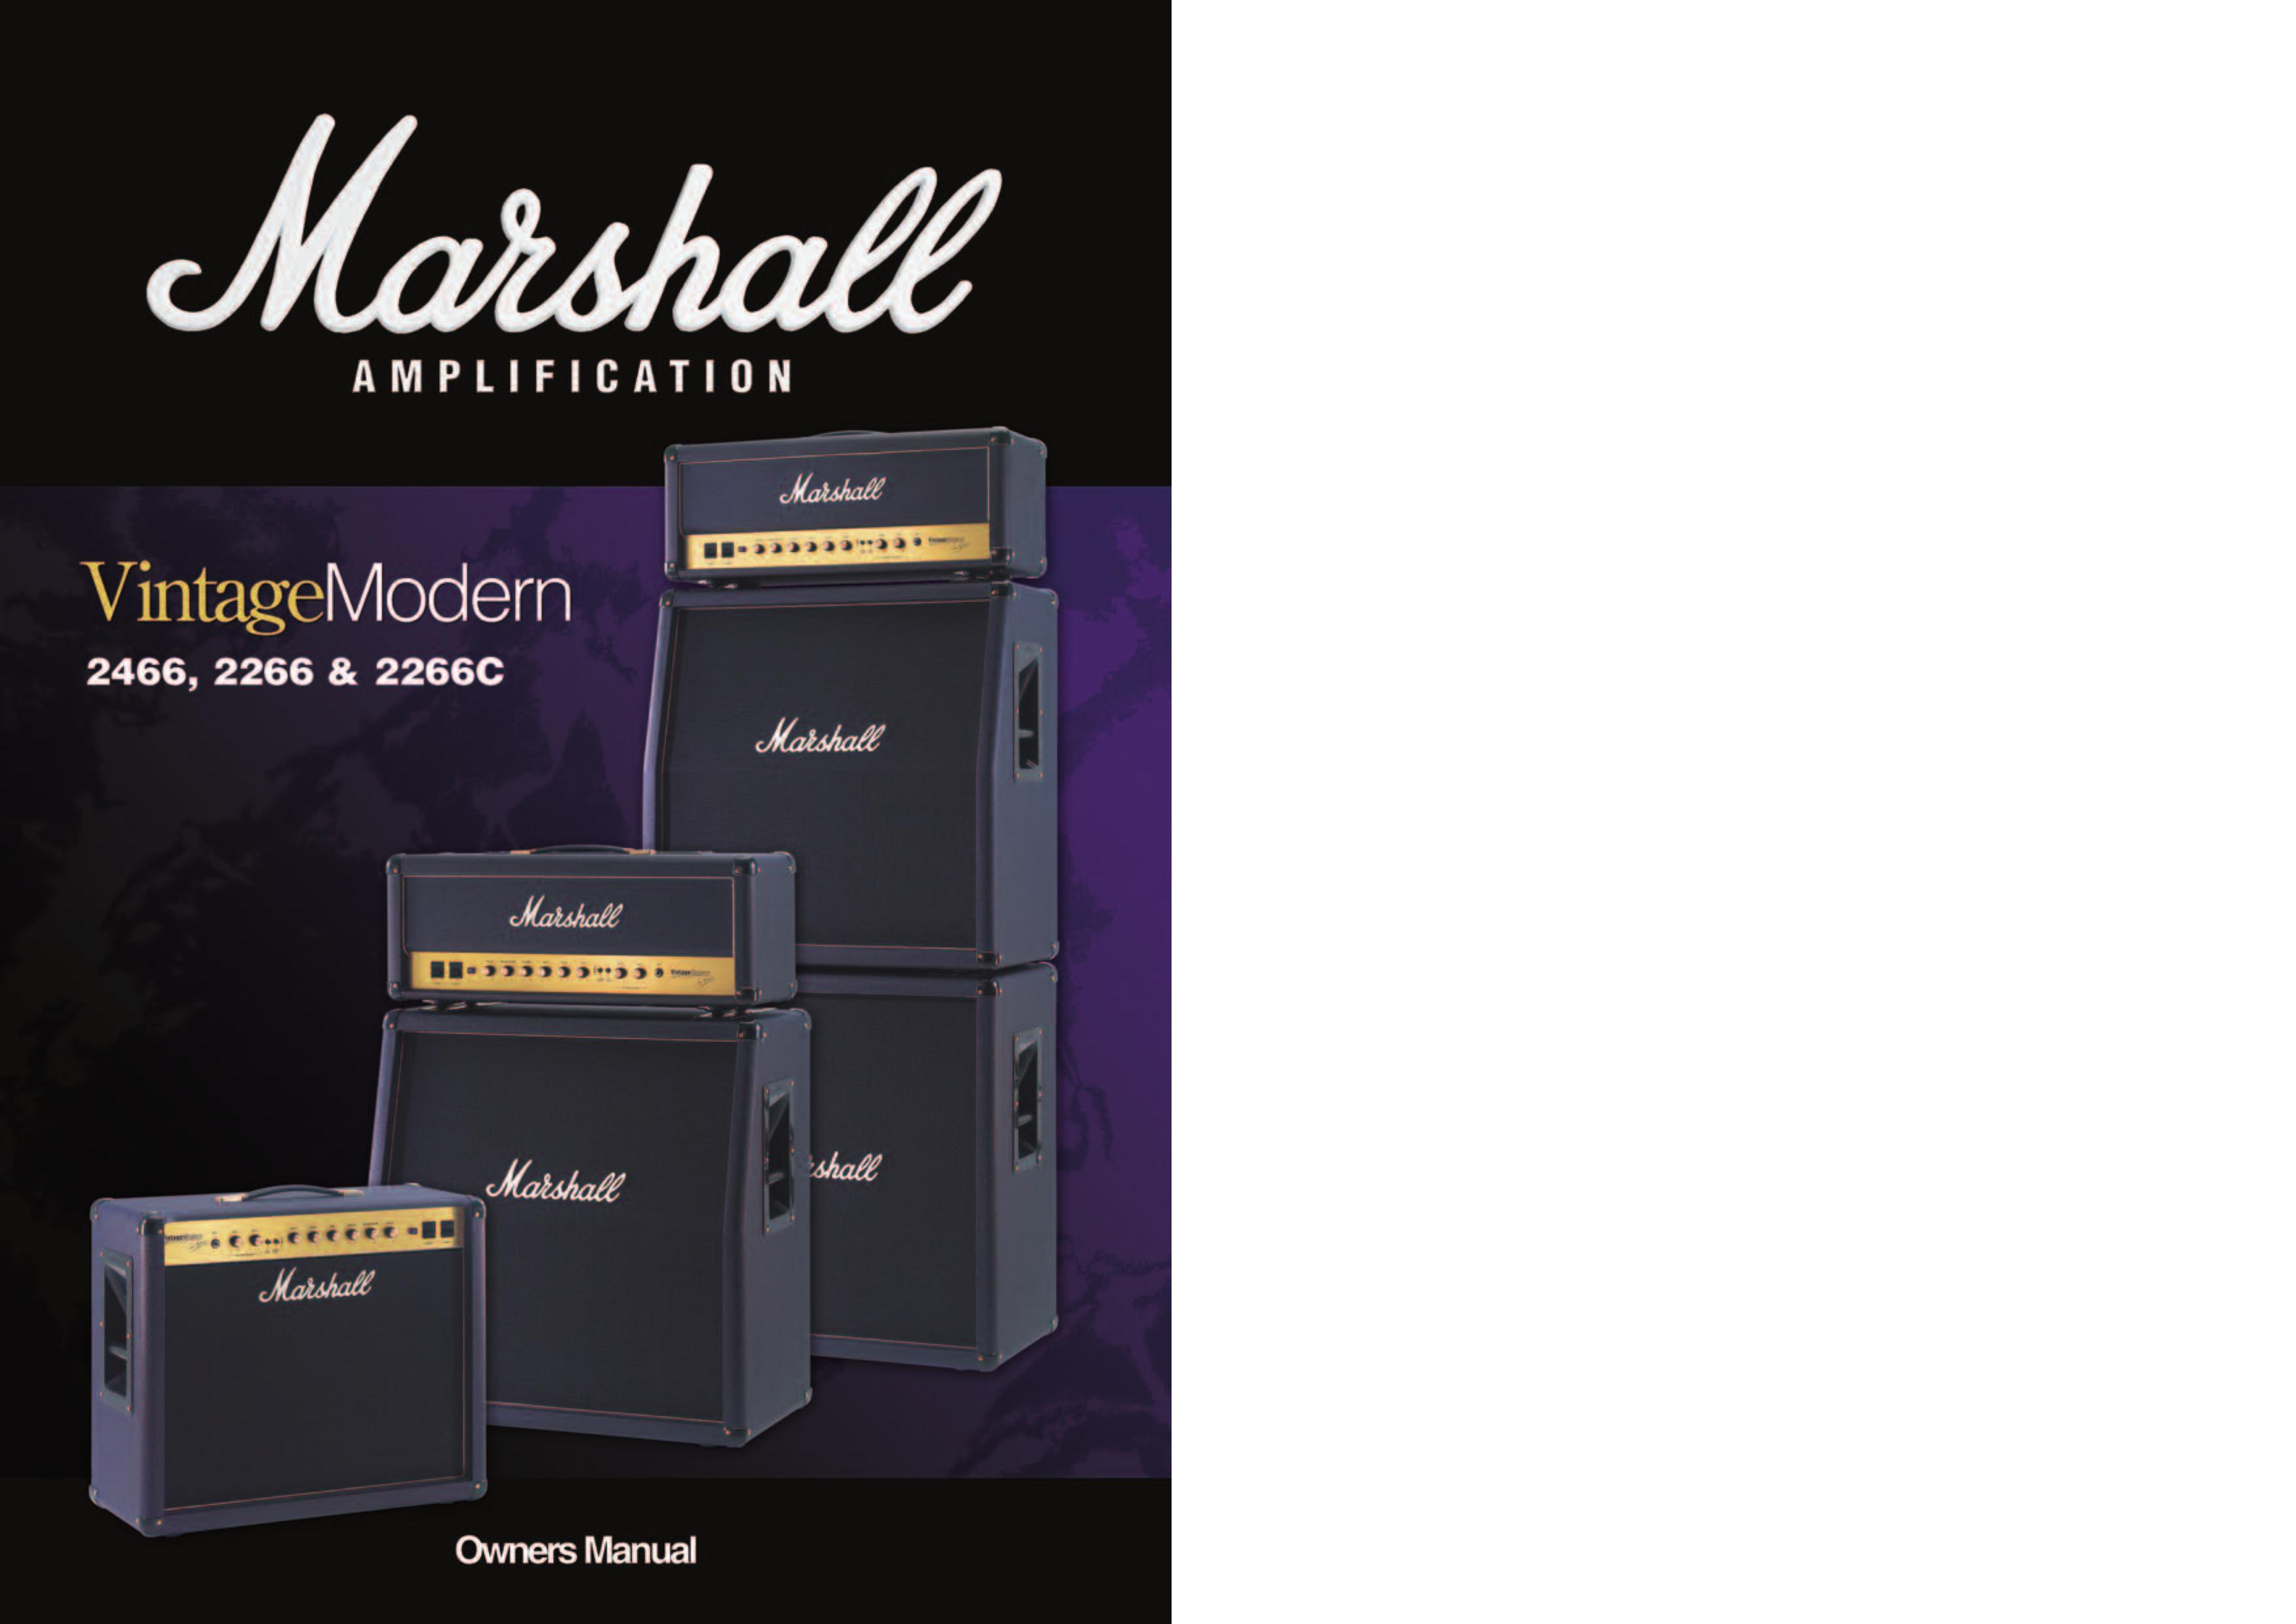 Marshall Amplification 2266 Musical Instrument Amplifier User Manual